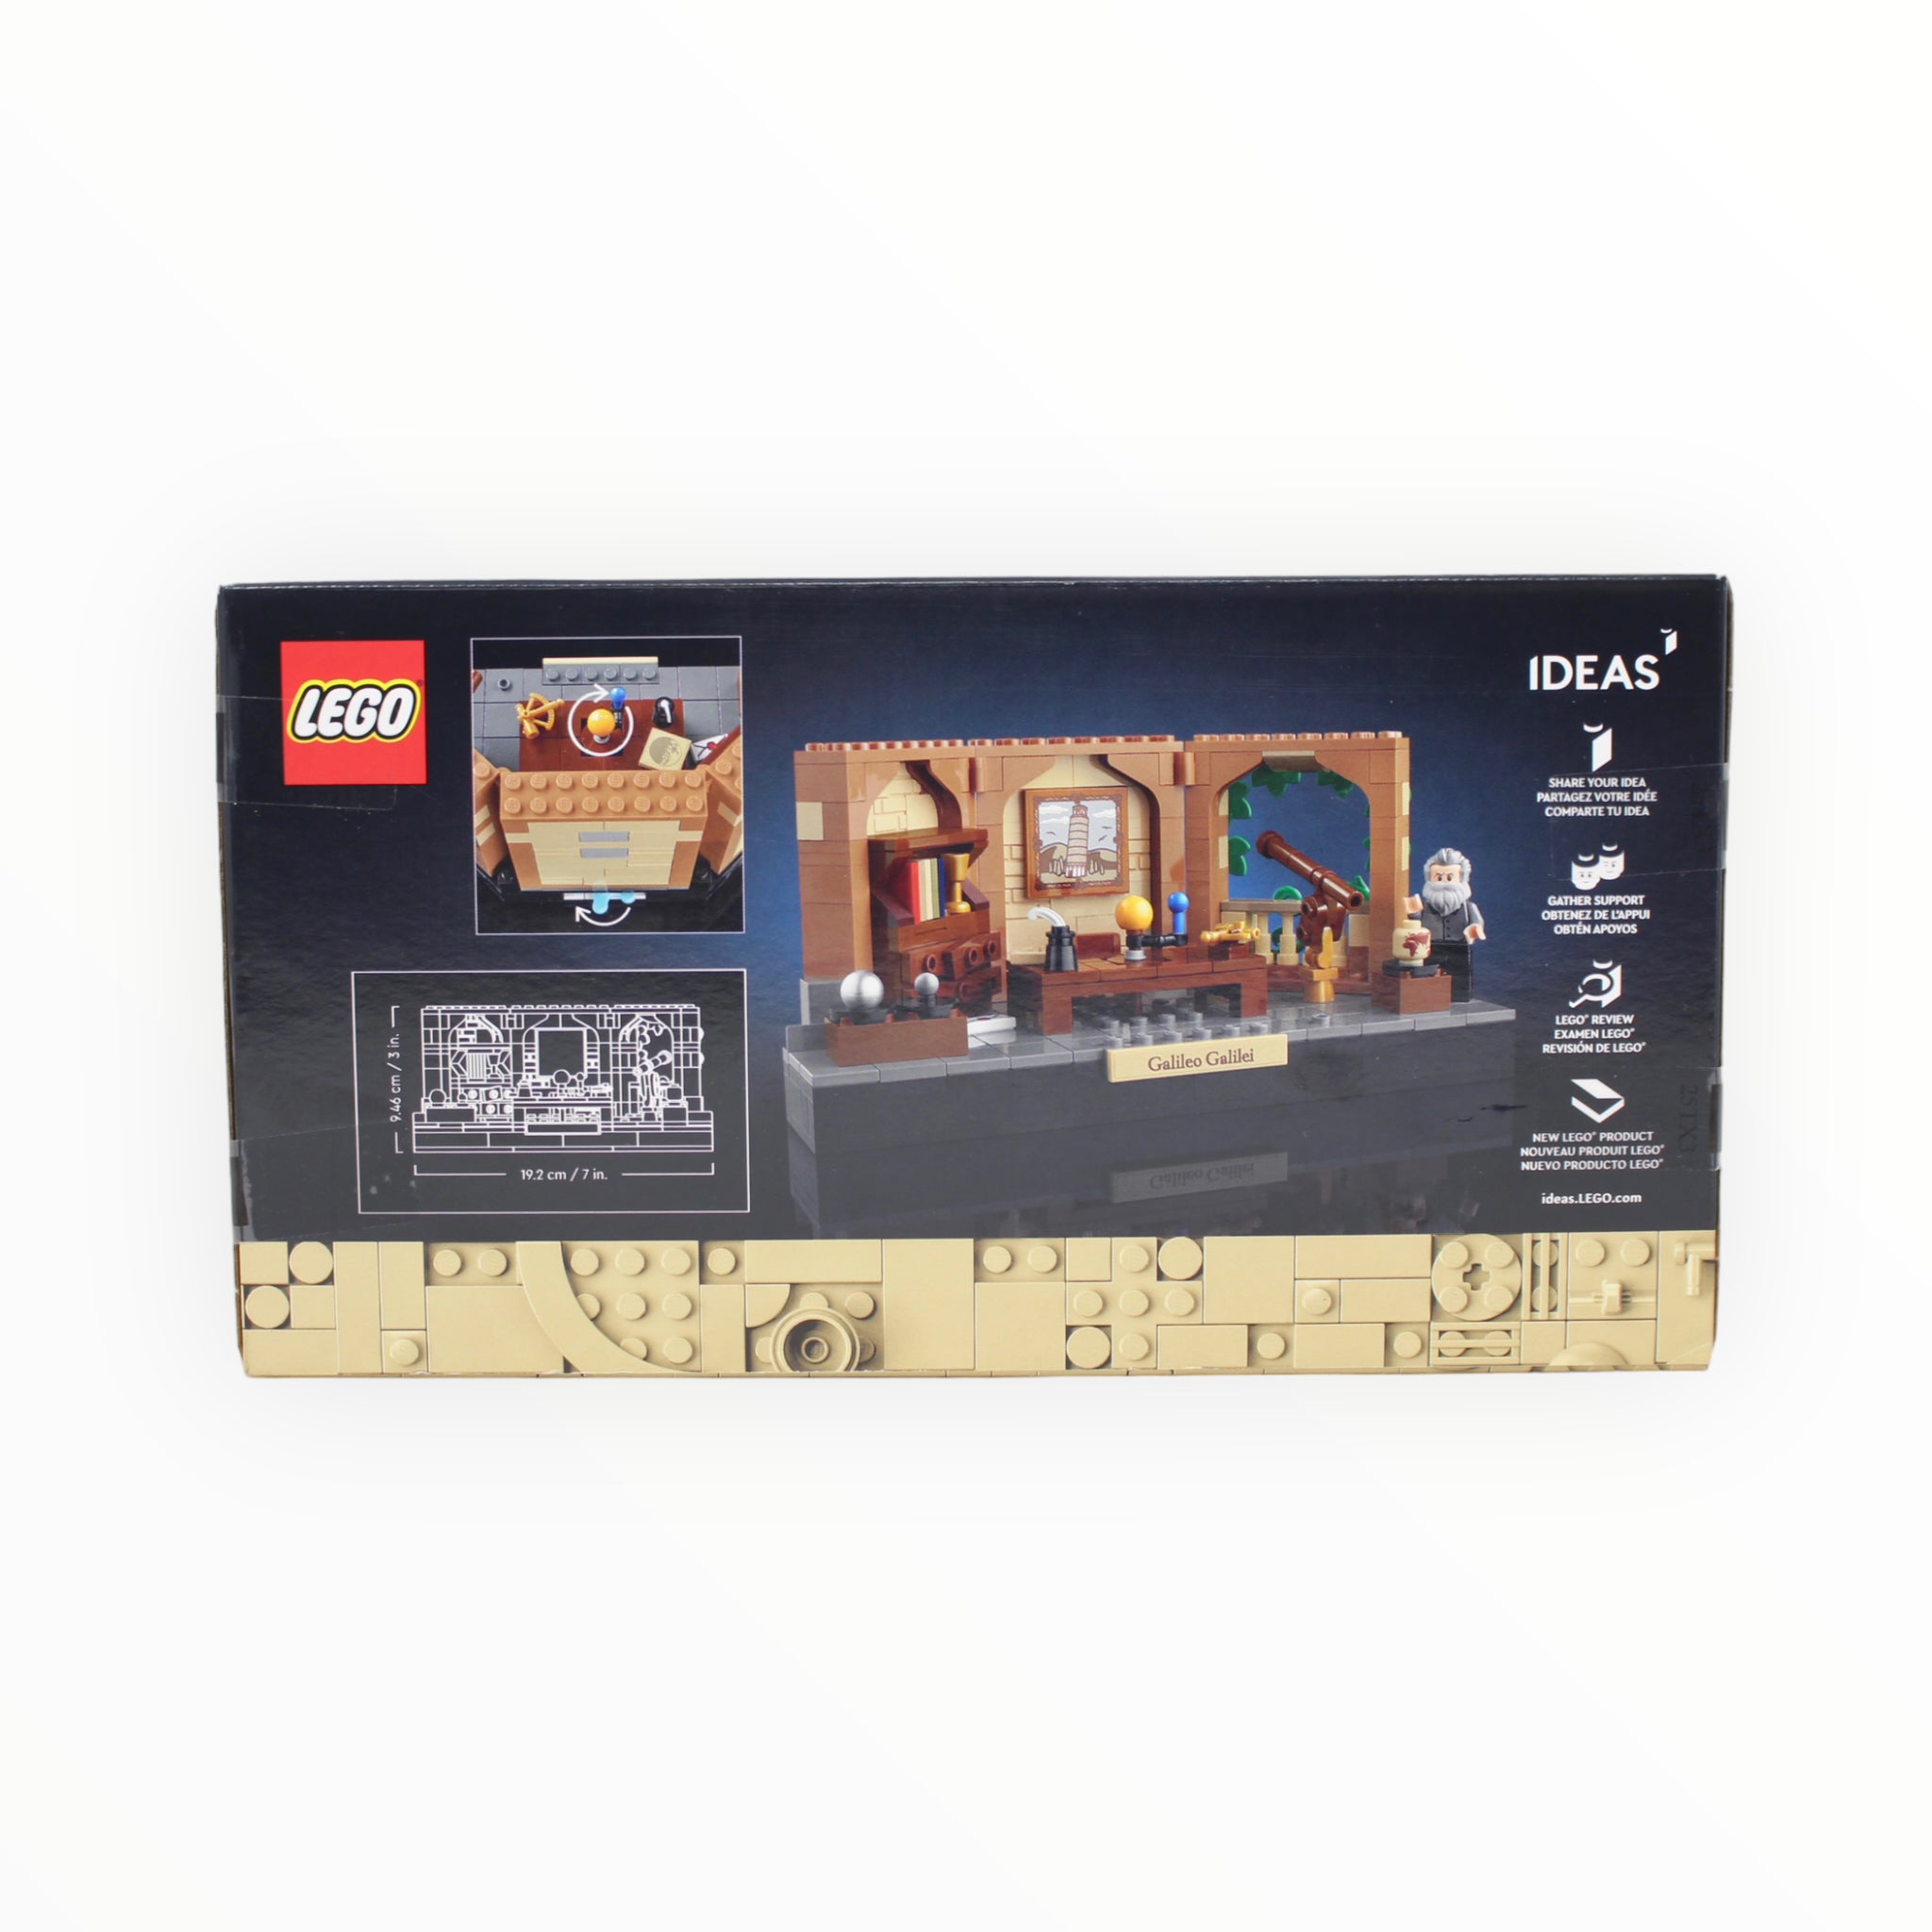 Retired Set 40595 LEGO Ideas Tribute to Galileo Galilei